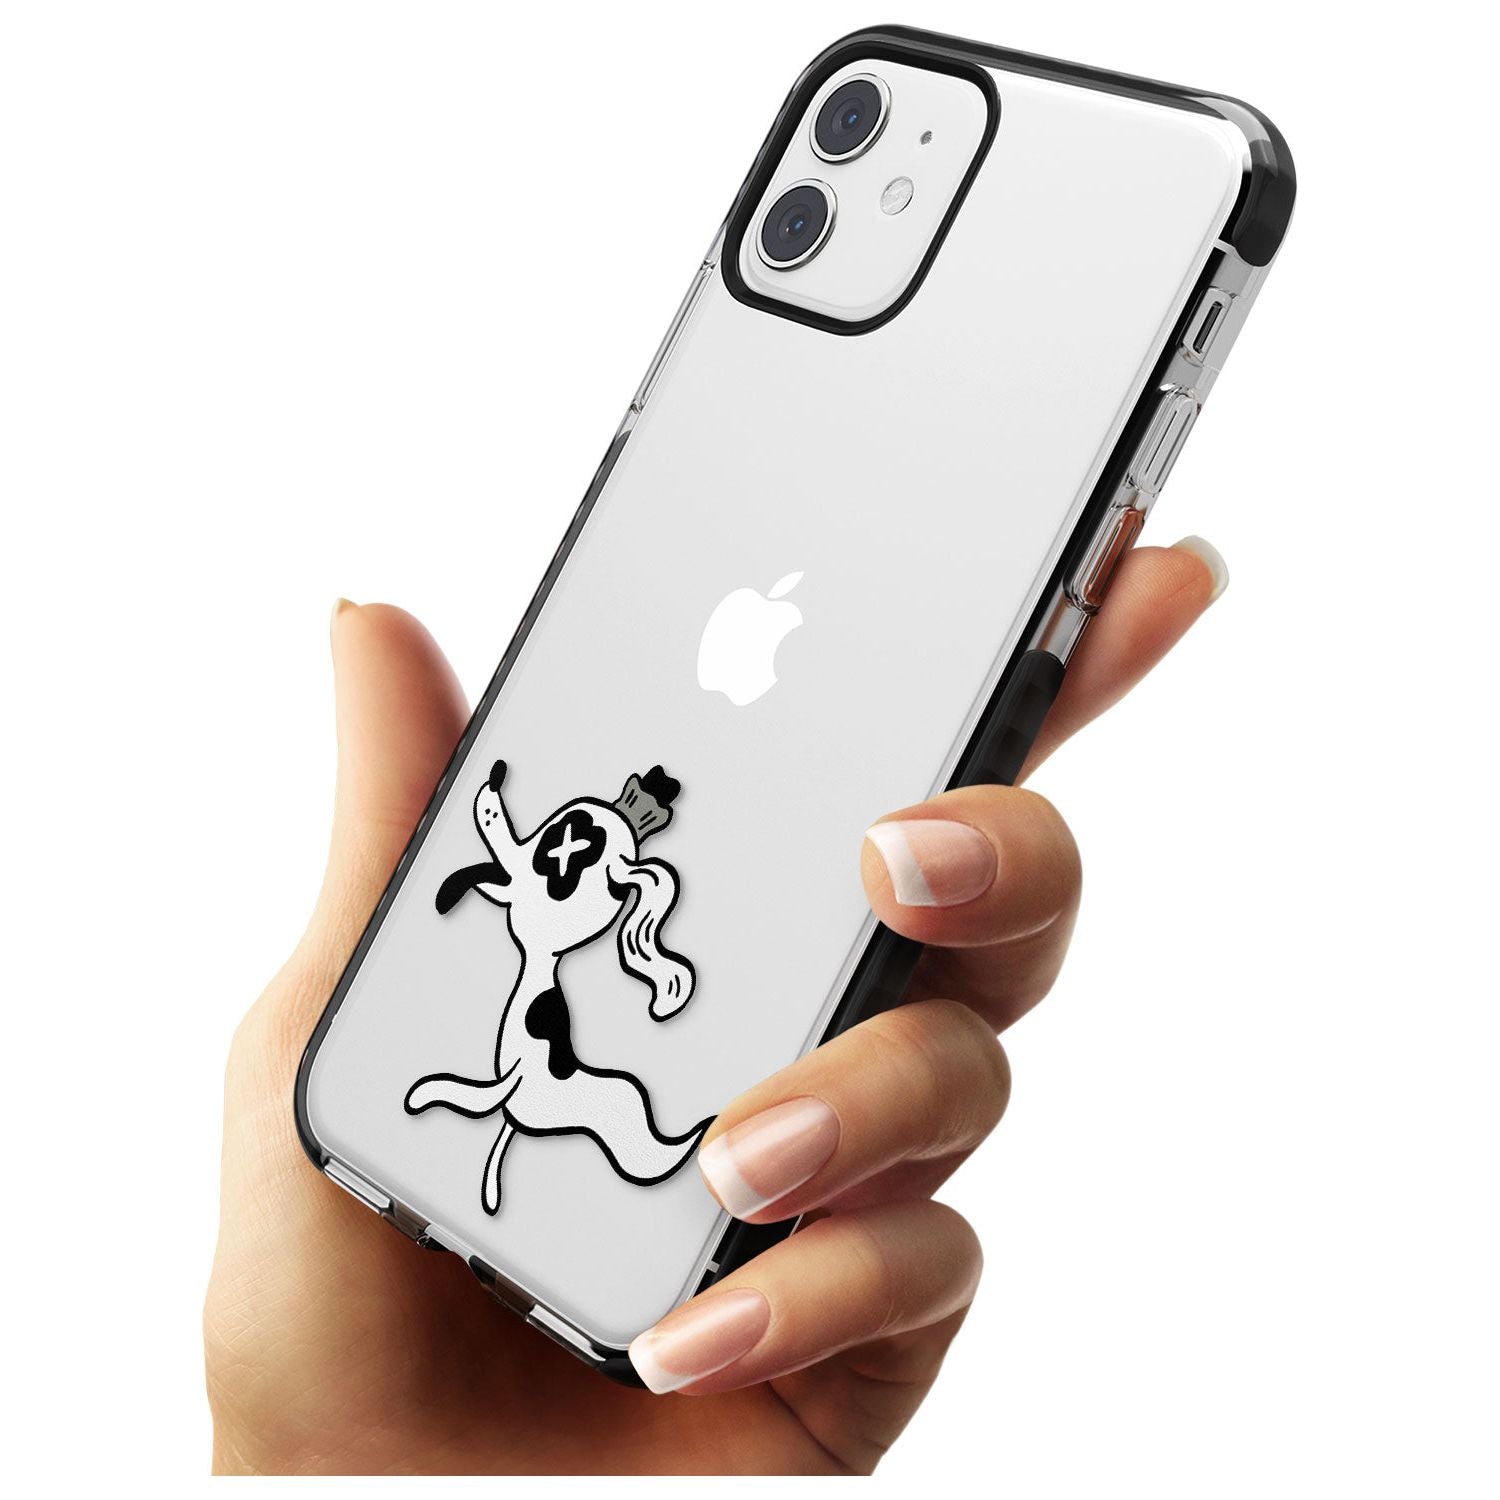 Dog Spirit Black Impact Phone Case for iPhone 11 Pro Max